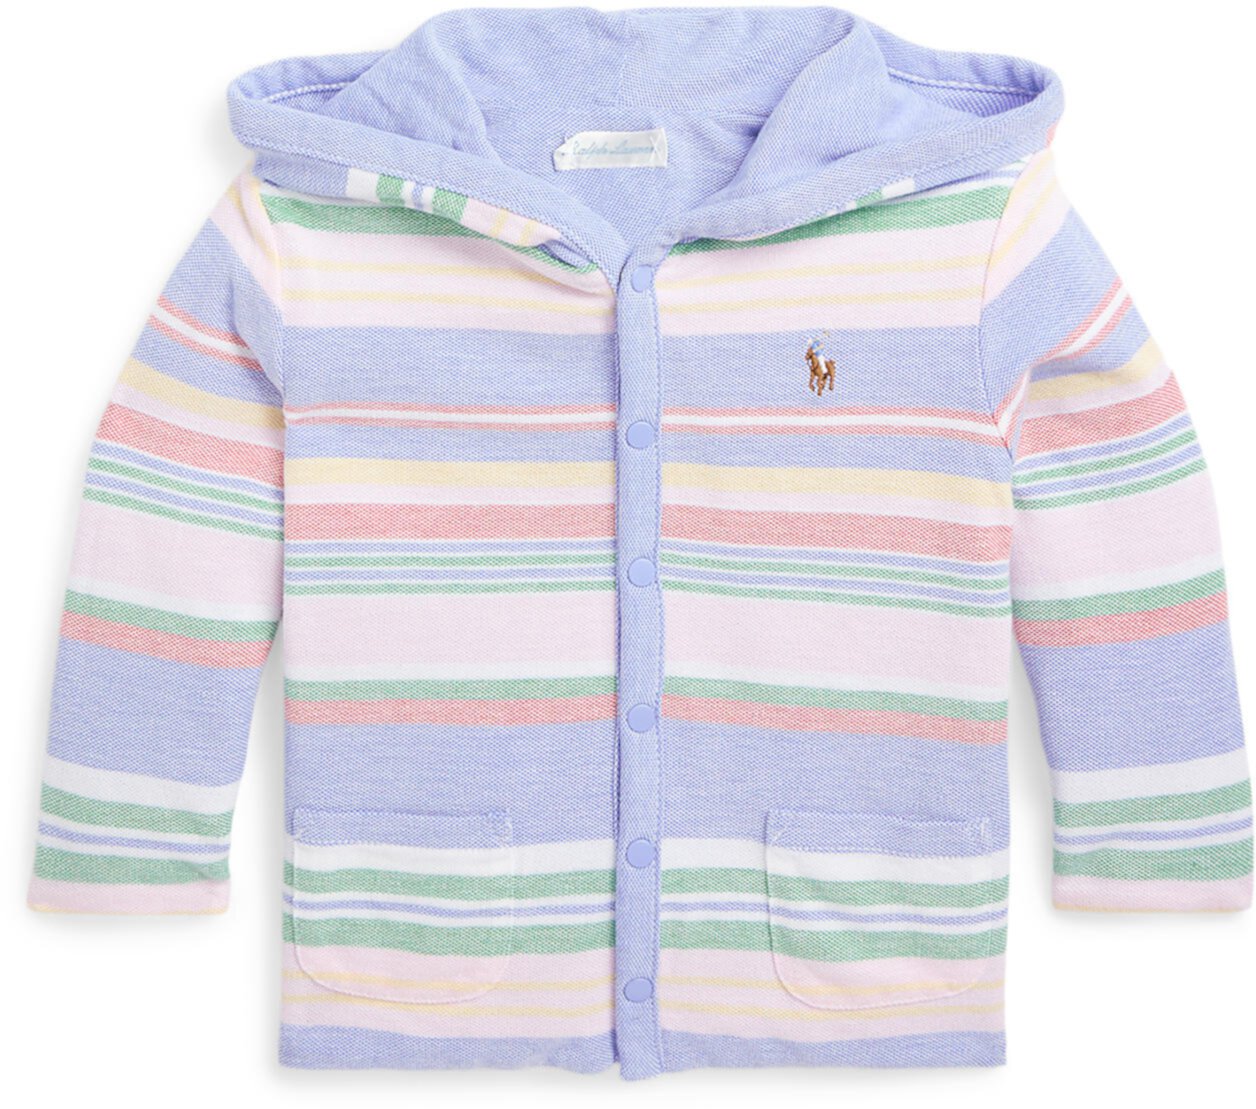 Двусторонняя хлопковая сетчатая куртка (для младенцев) Polo Ralph Lauren